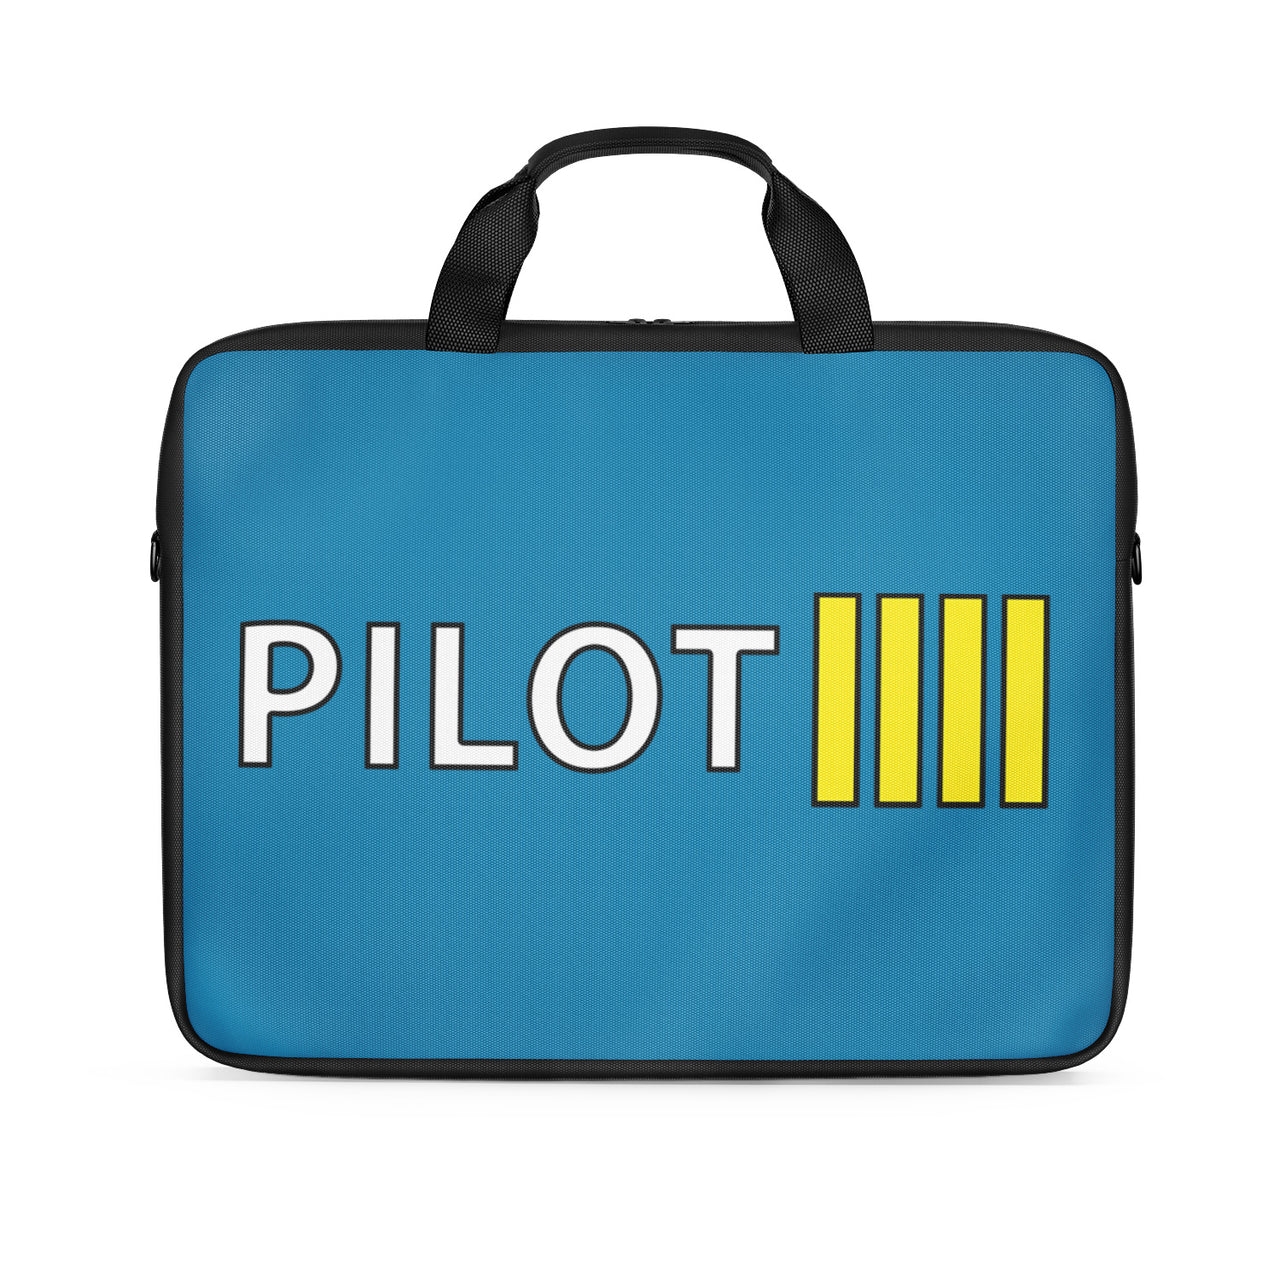 Pilot & Stripes (4 Lines) Designed Laptop & Tablet Bags